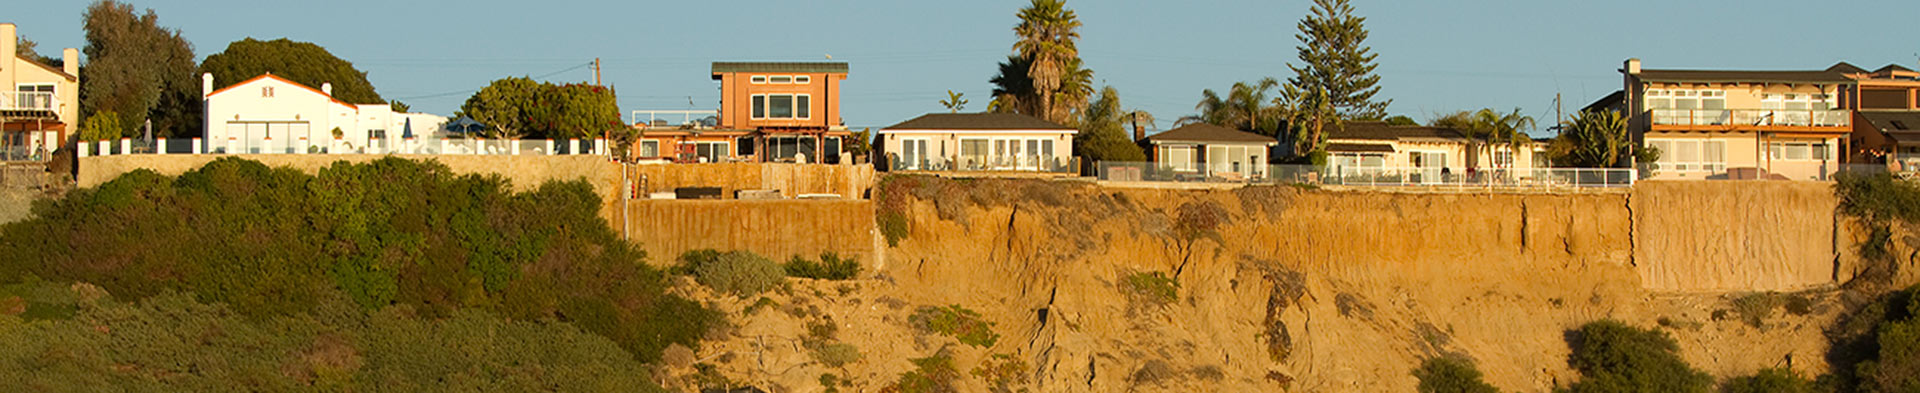 North County Coastal ocean view homes